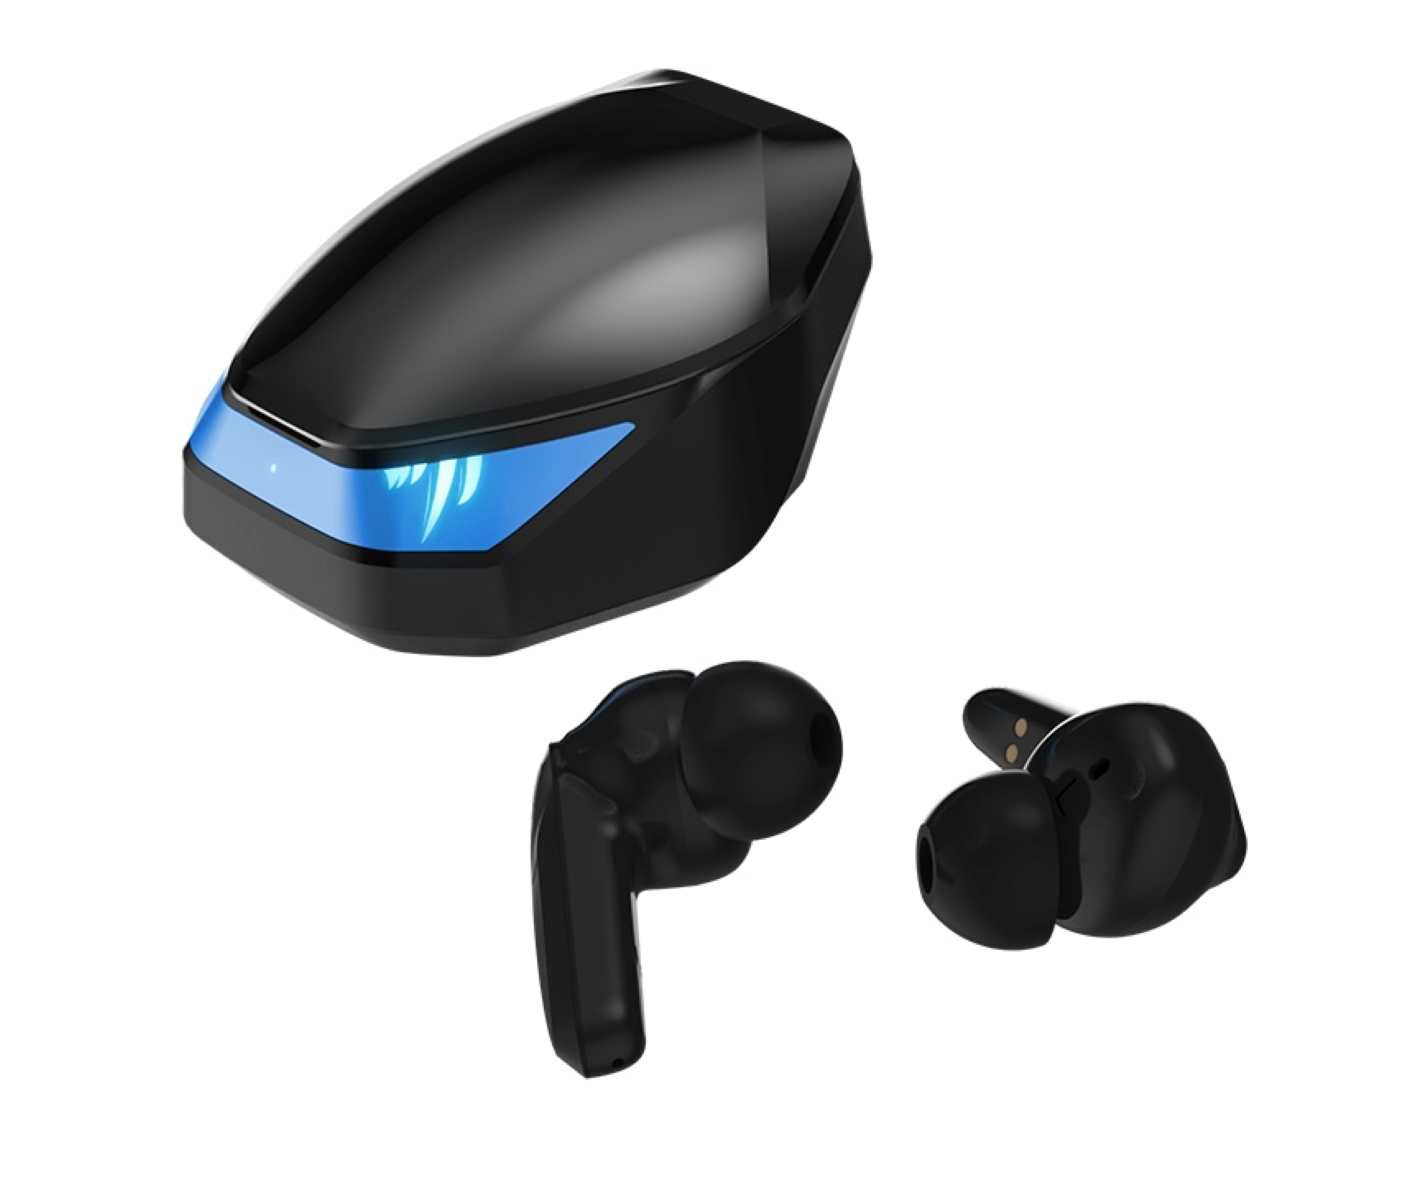 TW-S02, Wings 200 schwarz/blau SADES Bluetooth Gaming-Kopfhöhrer In-ear